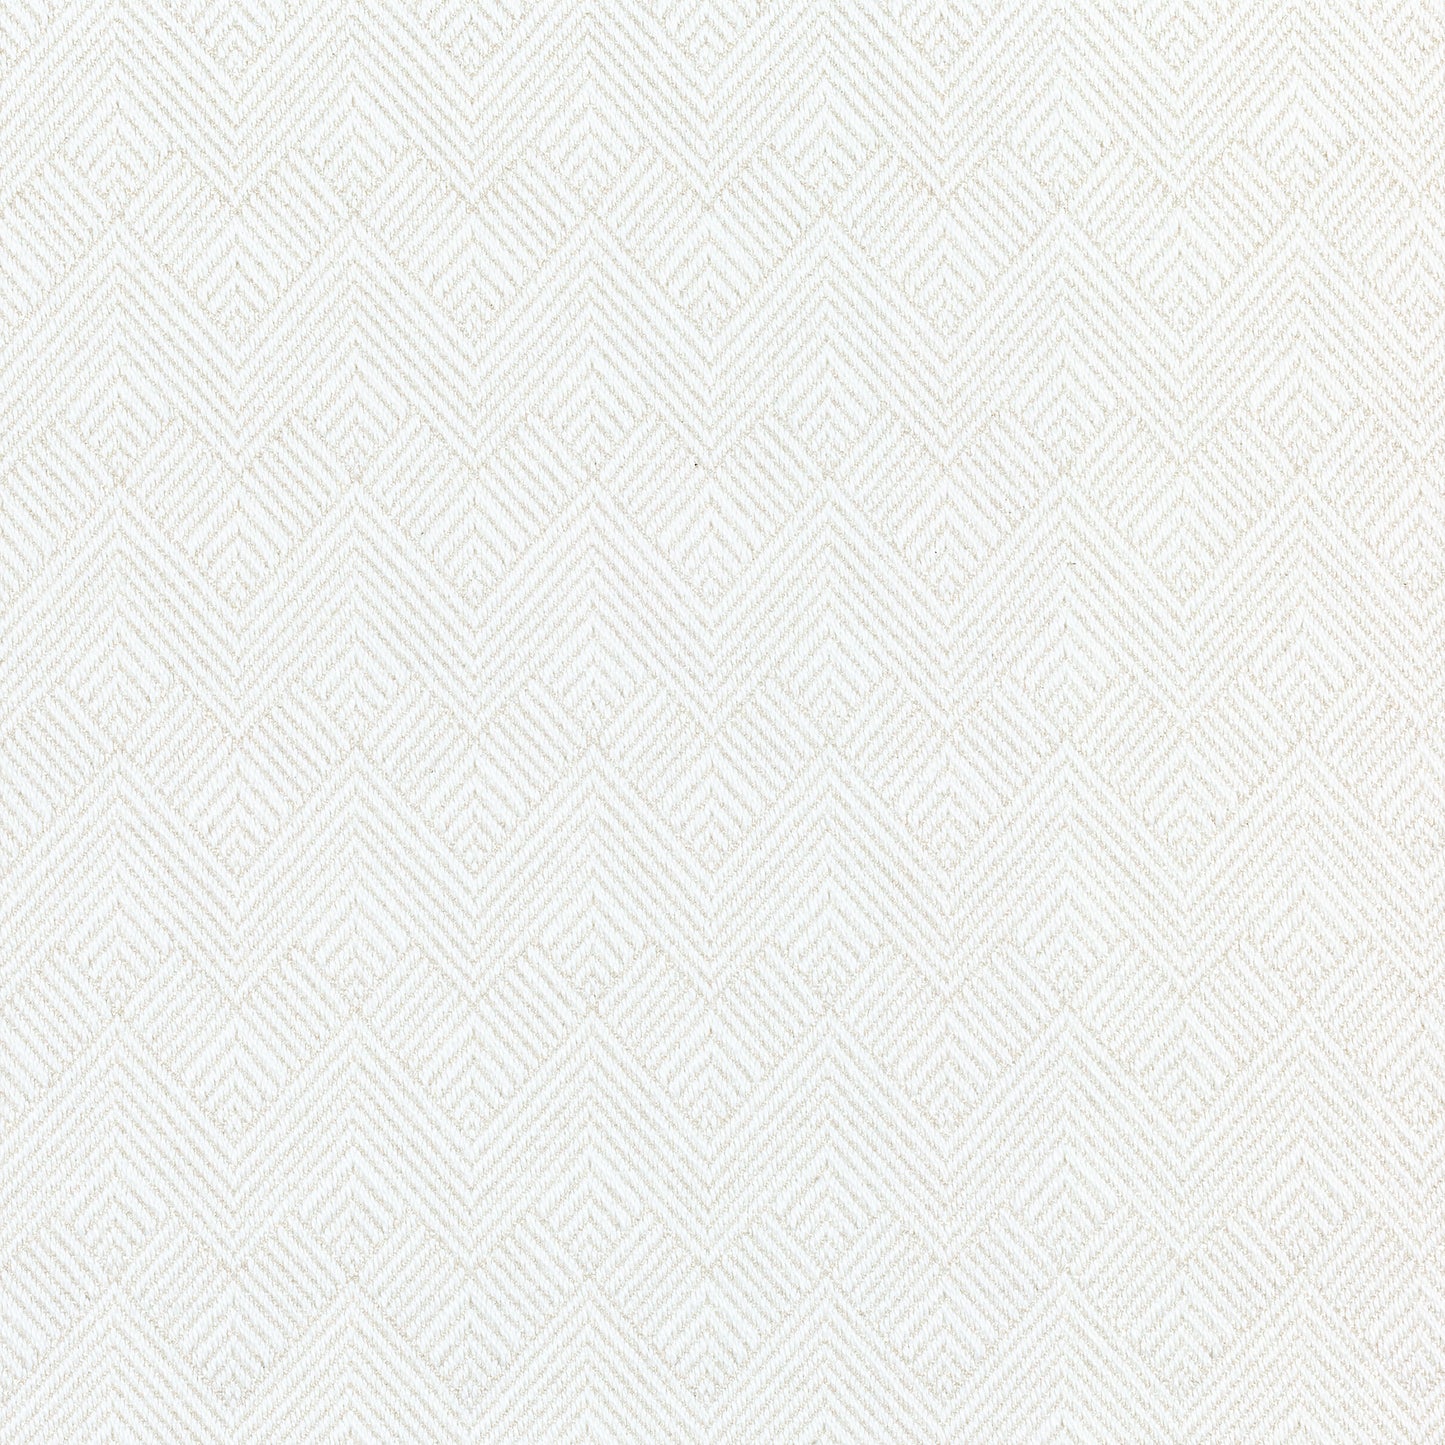 Purchase Thibaut Fabric Item# W73332 pattern name Maddox color Vanilla